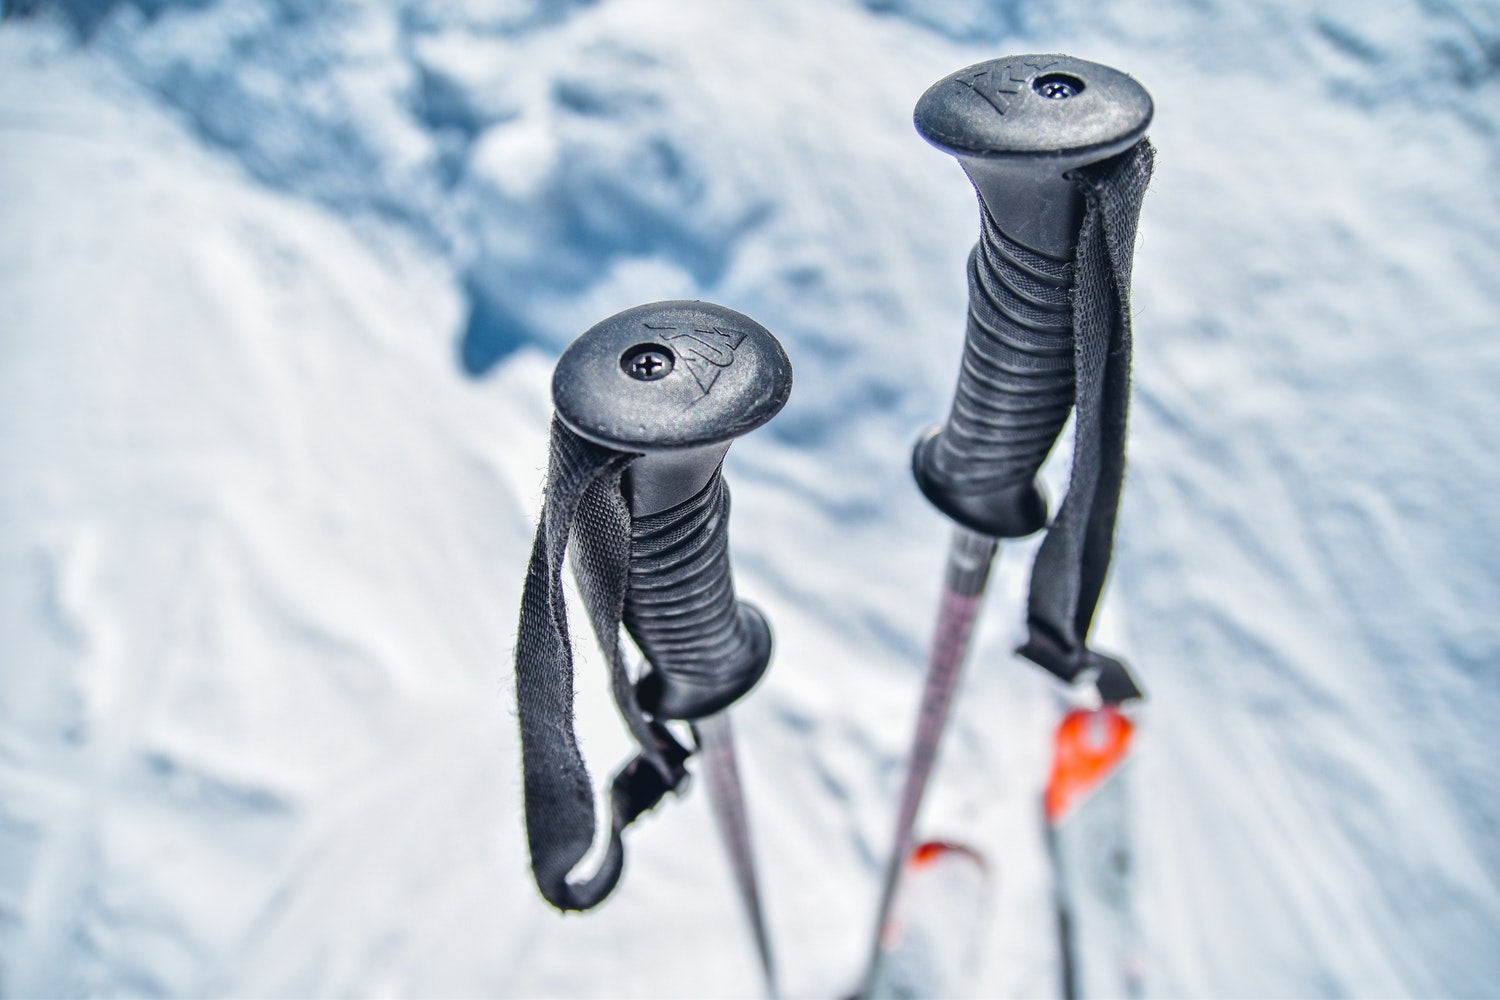 Ski poles for snowboarding gear list